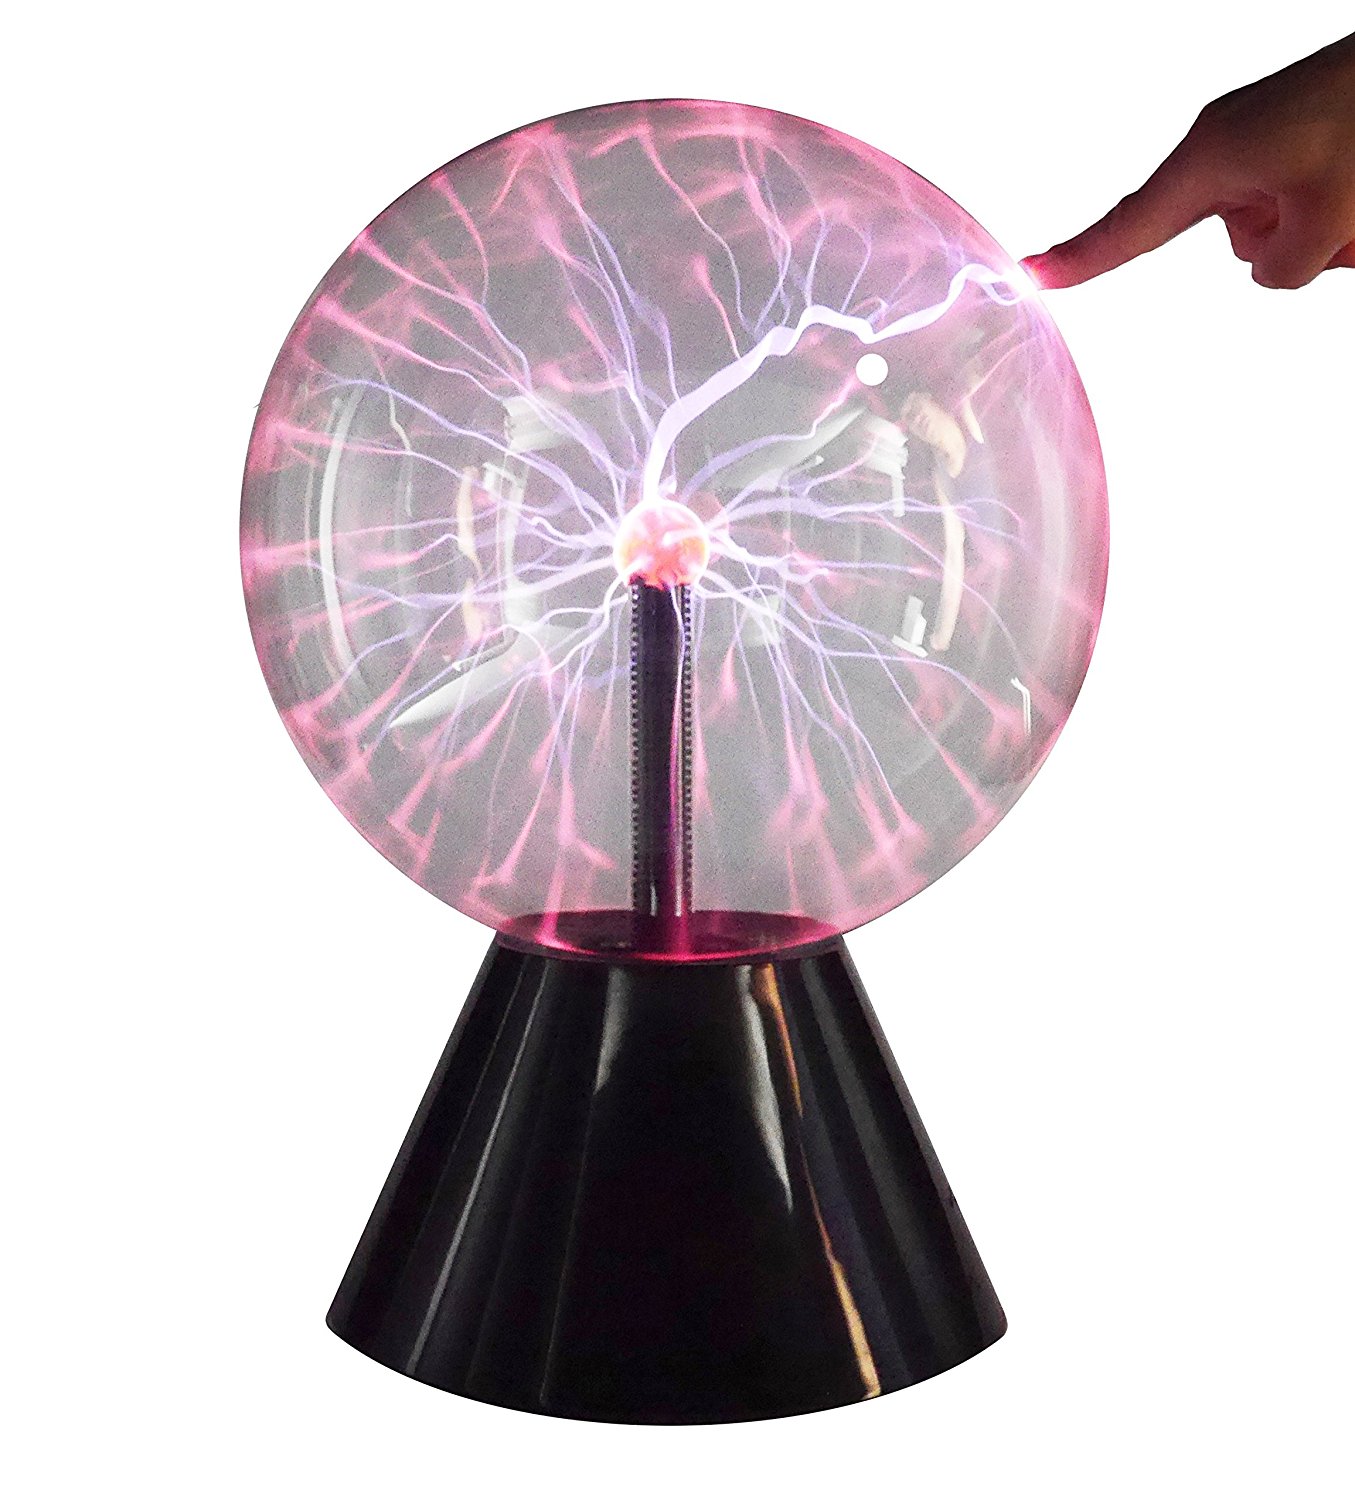 Unique Gadgets & Toys 15-Inch Giant Nebula Plasma Ball - - Amazon.com